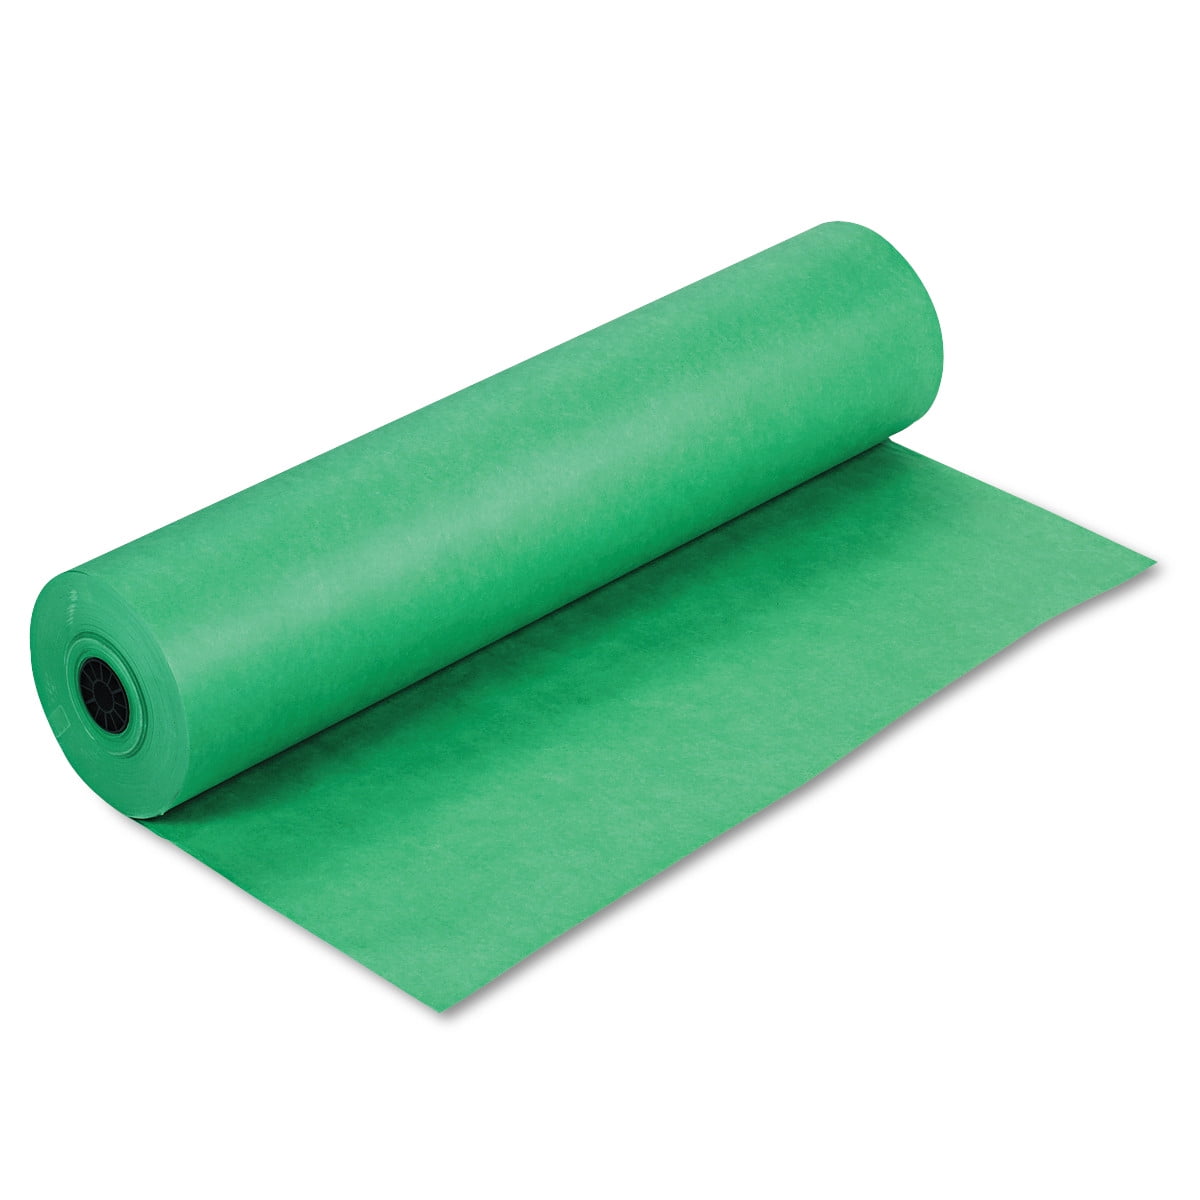 Trimaco 12308 36 in. x 1000 ft. Green Premium Masking Paper